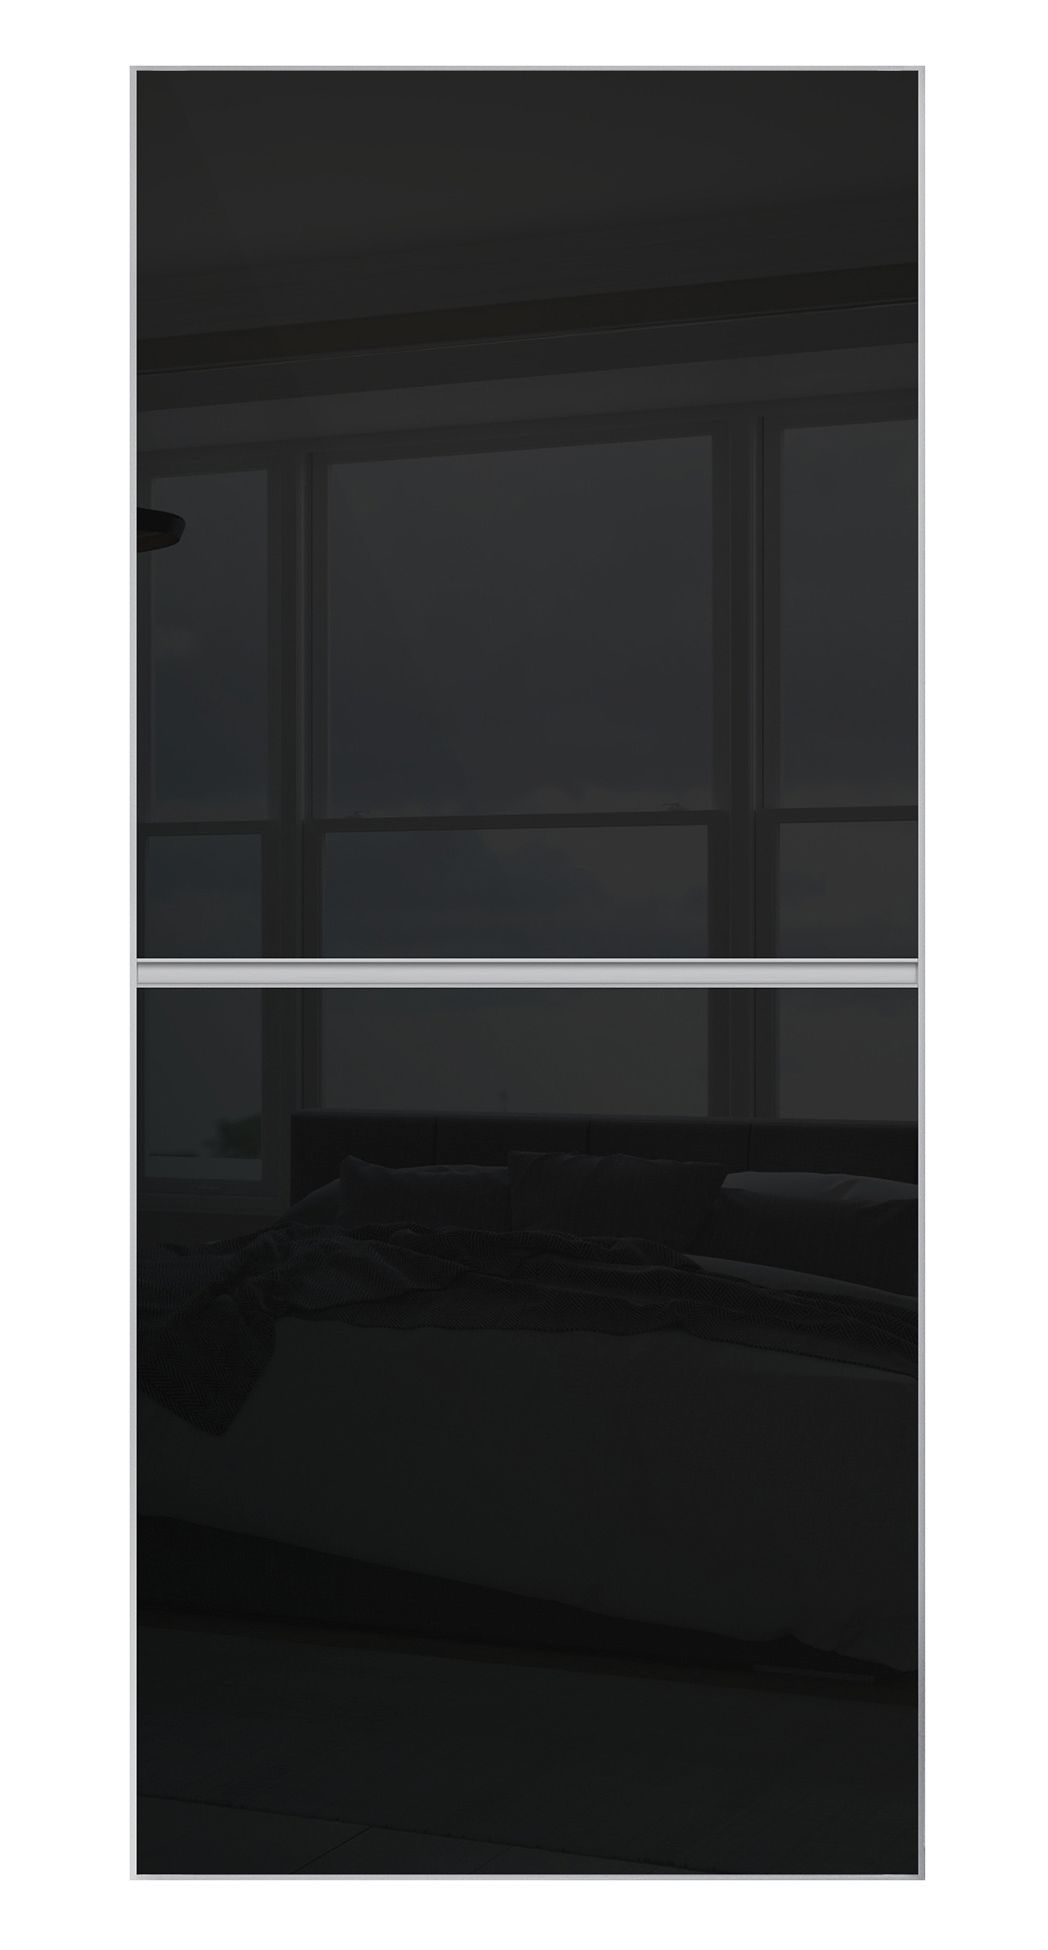 Image of Spacepro Minimalist Sliding Wardrobe Door 2 Panel Silver Frame Black - 610mm